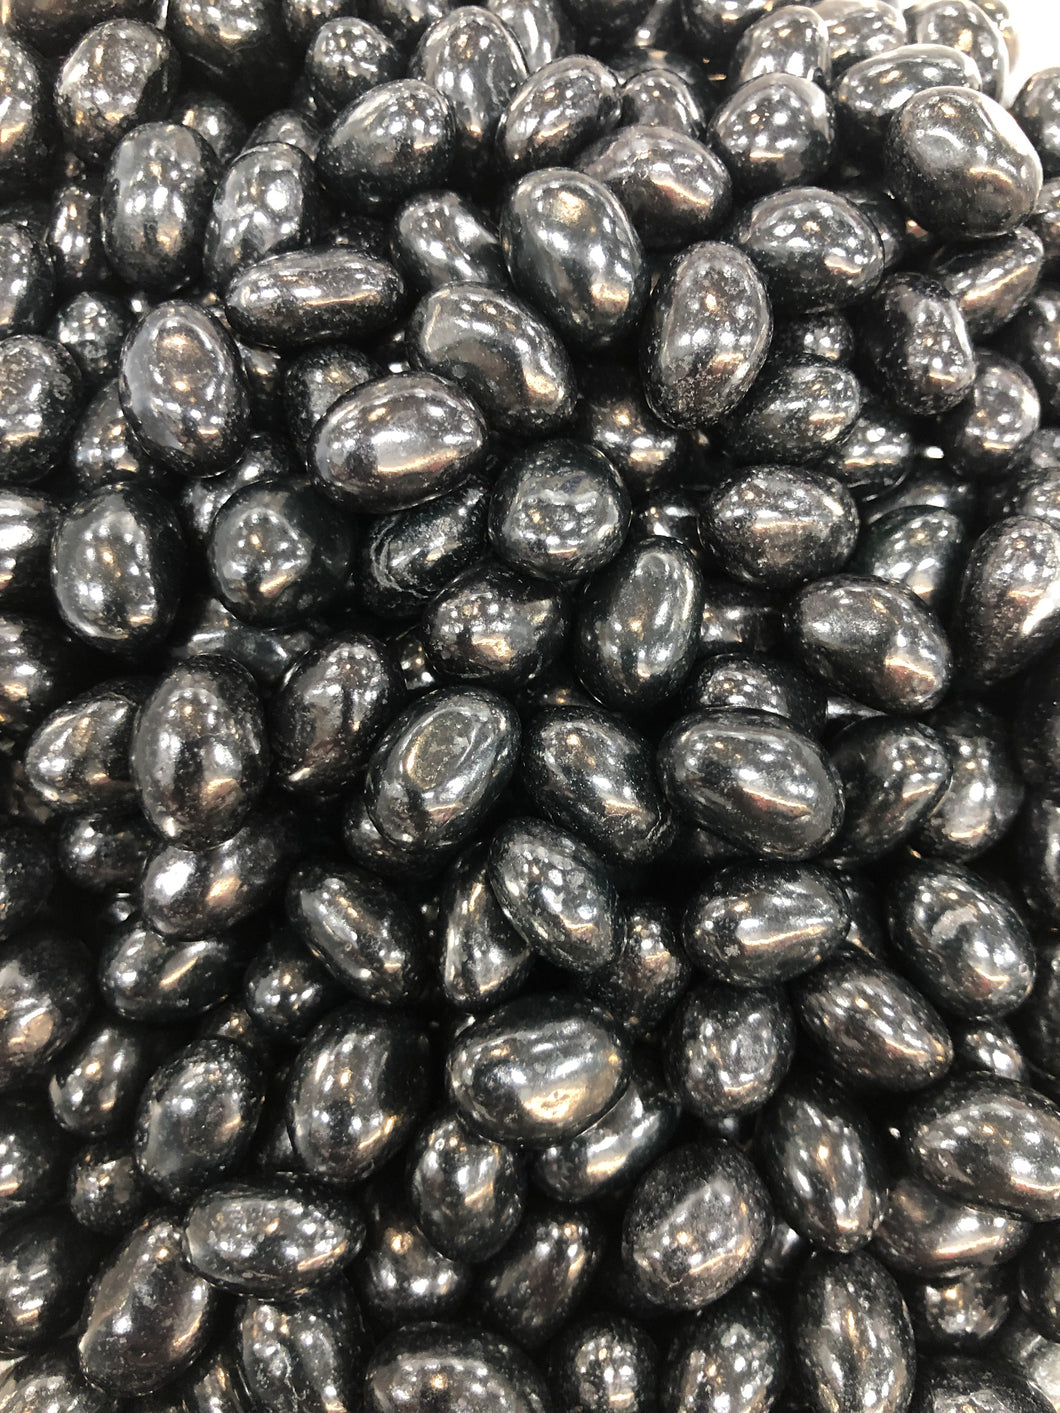 Black Jelly Beans